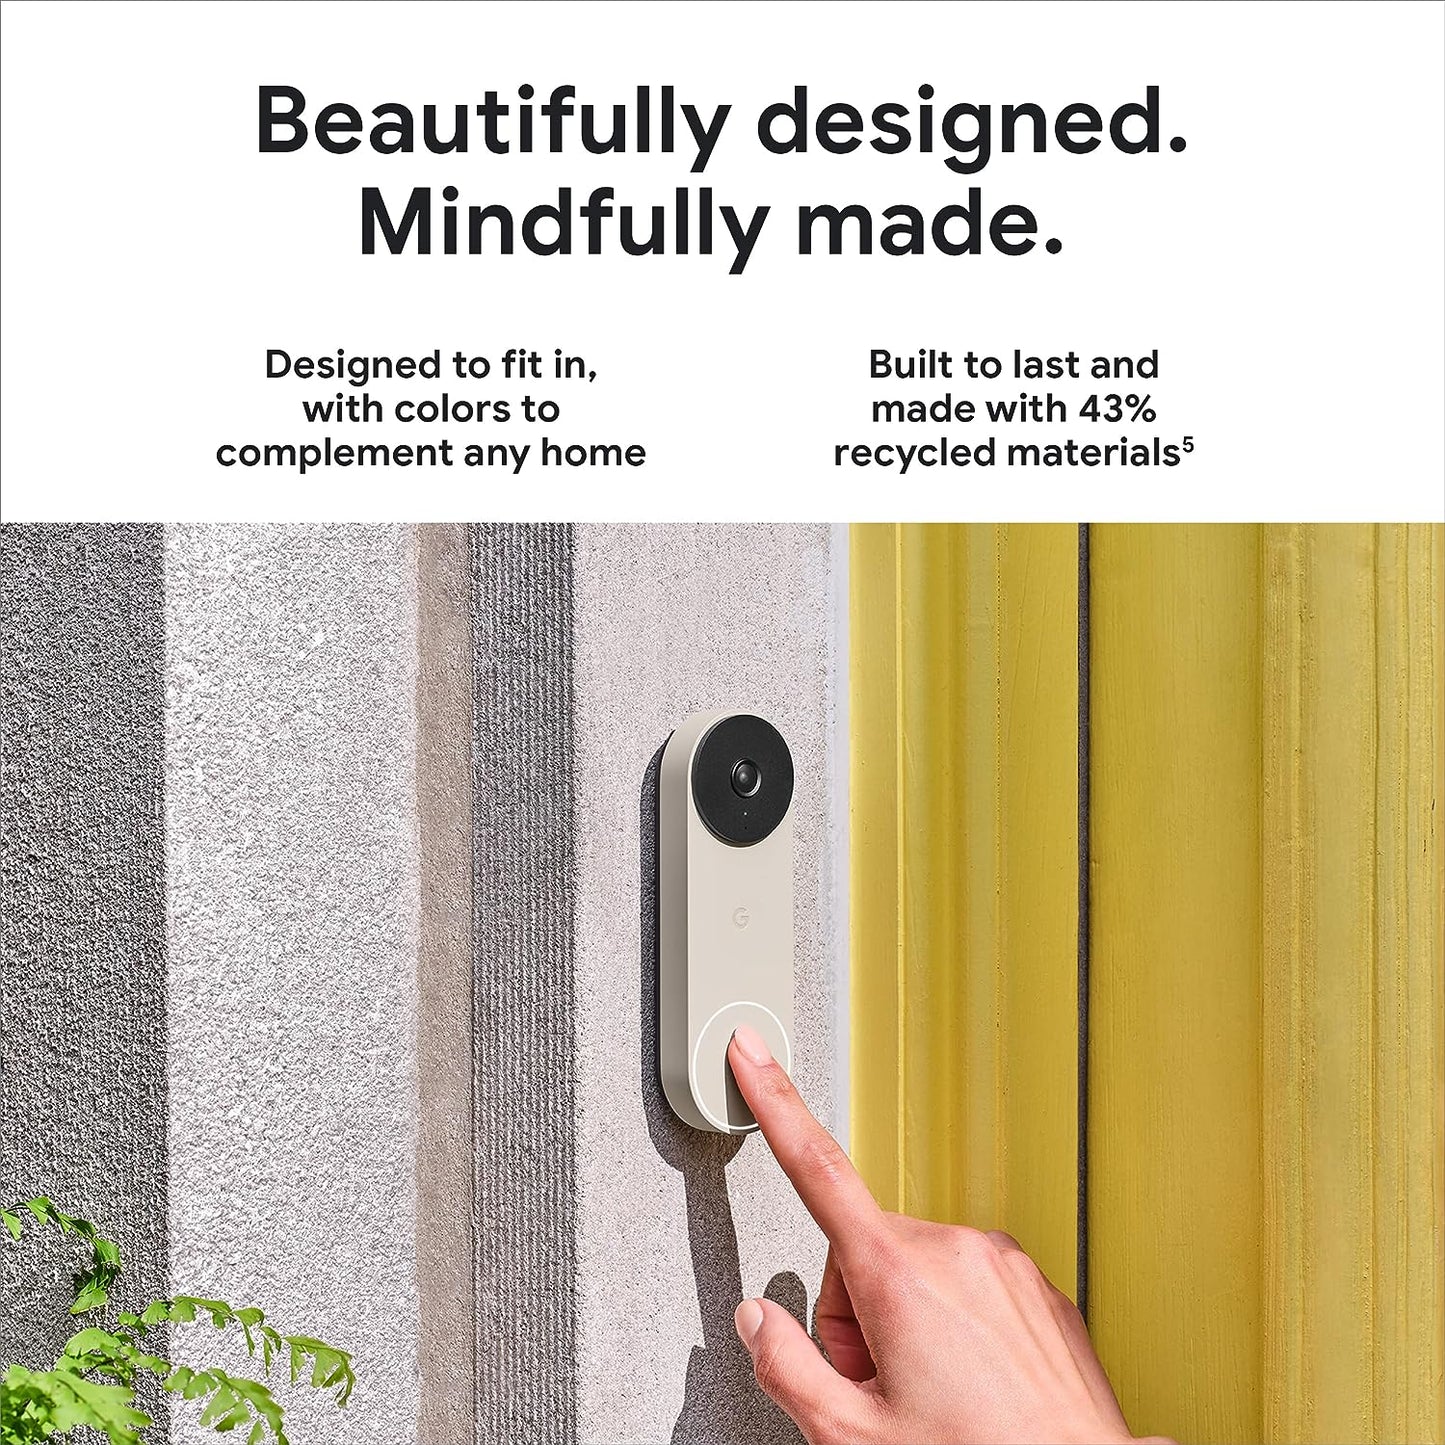 Ring Door Bell| Google Nest Doorbell GA03696-US 2nd Generation Wired ASH